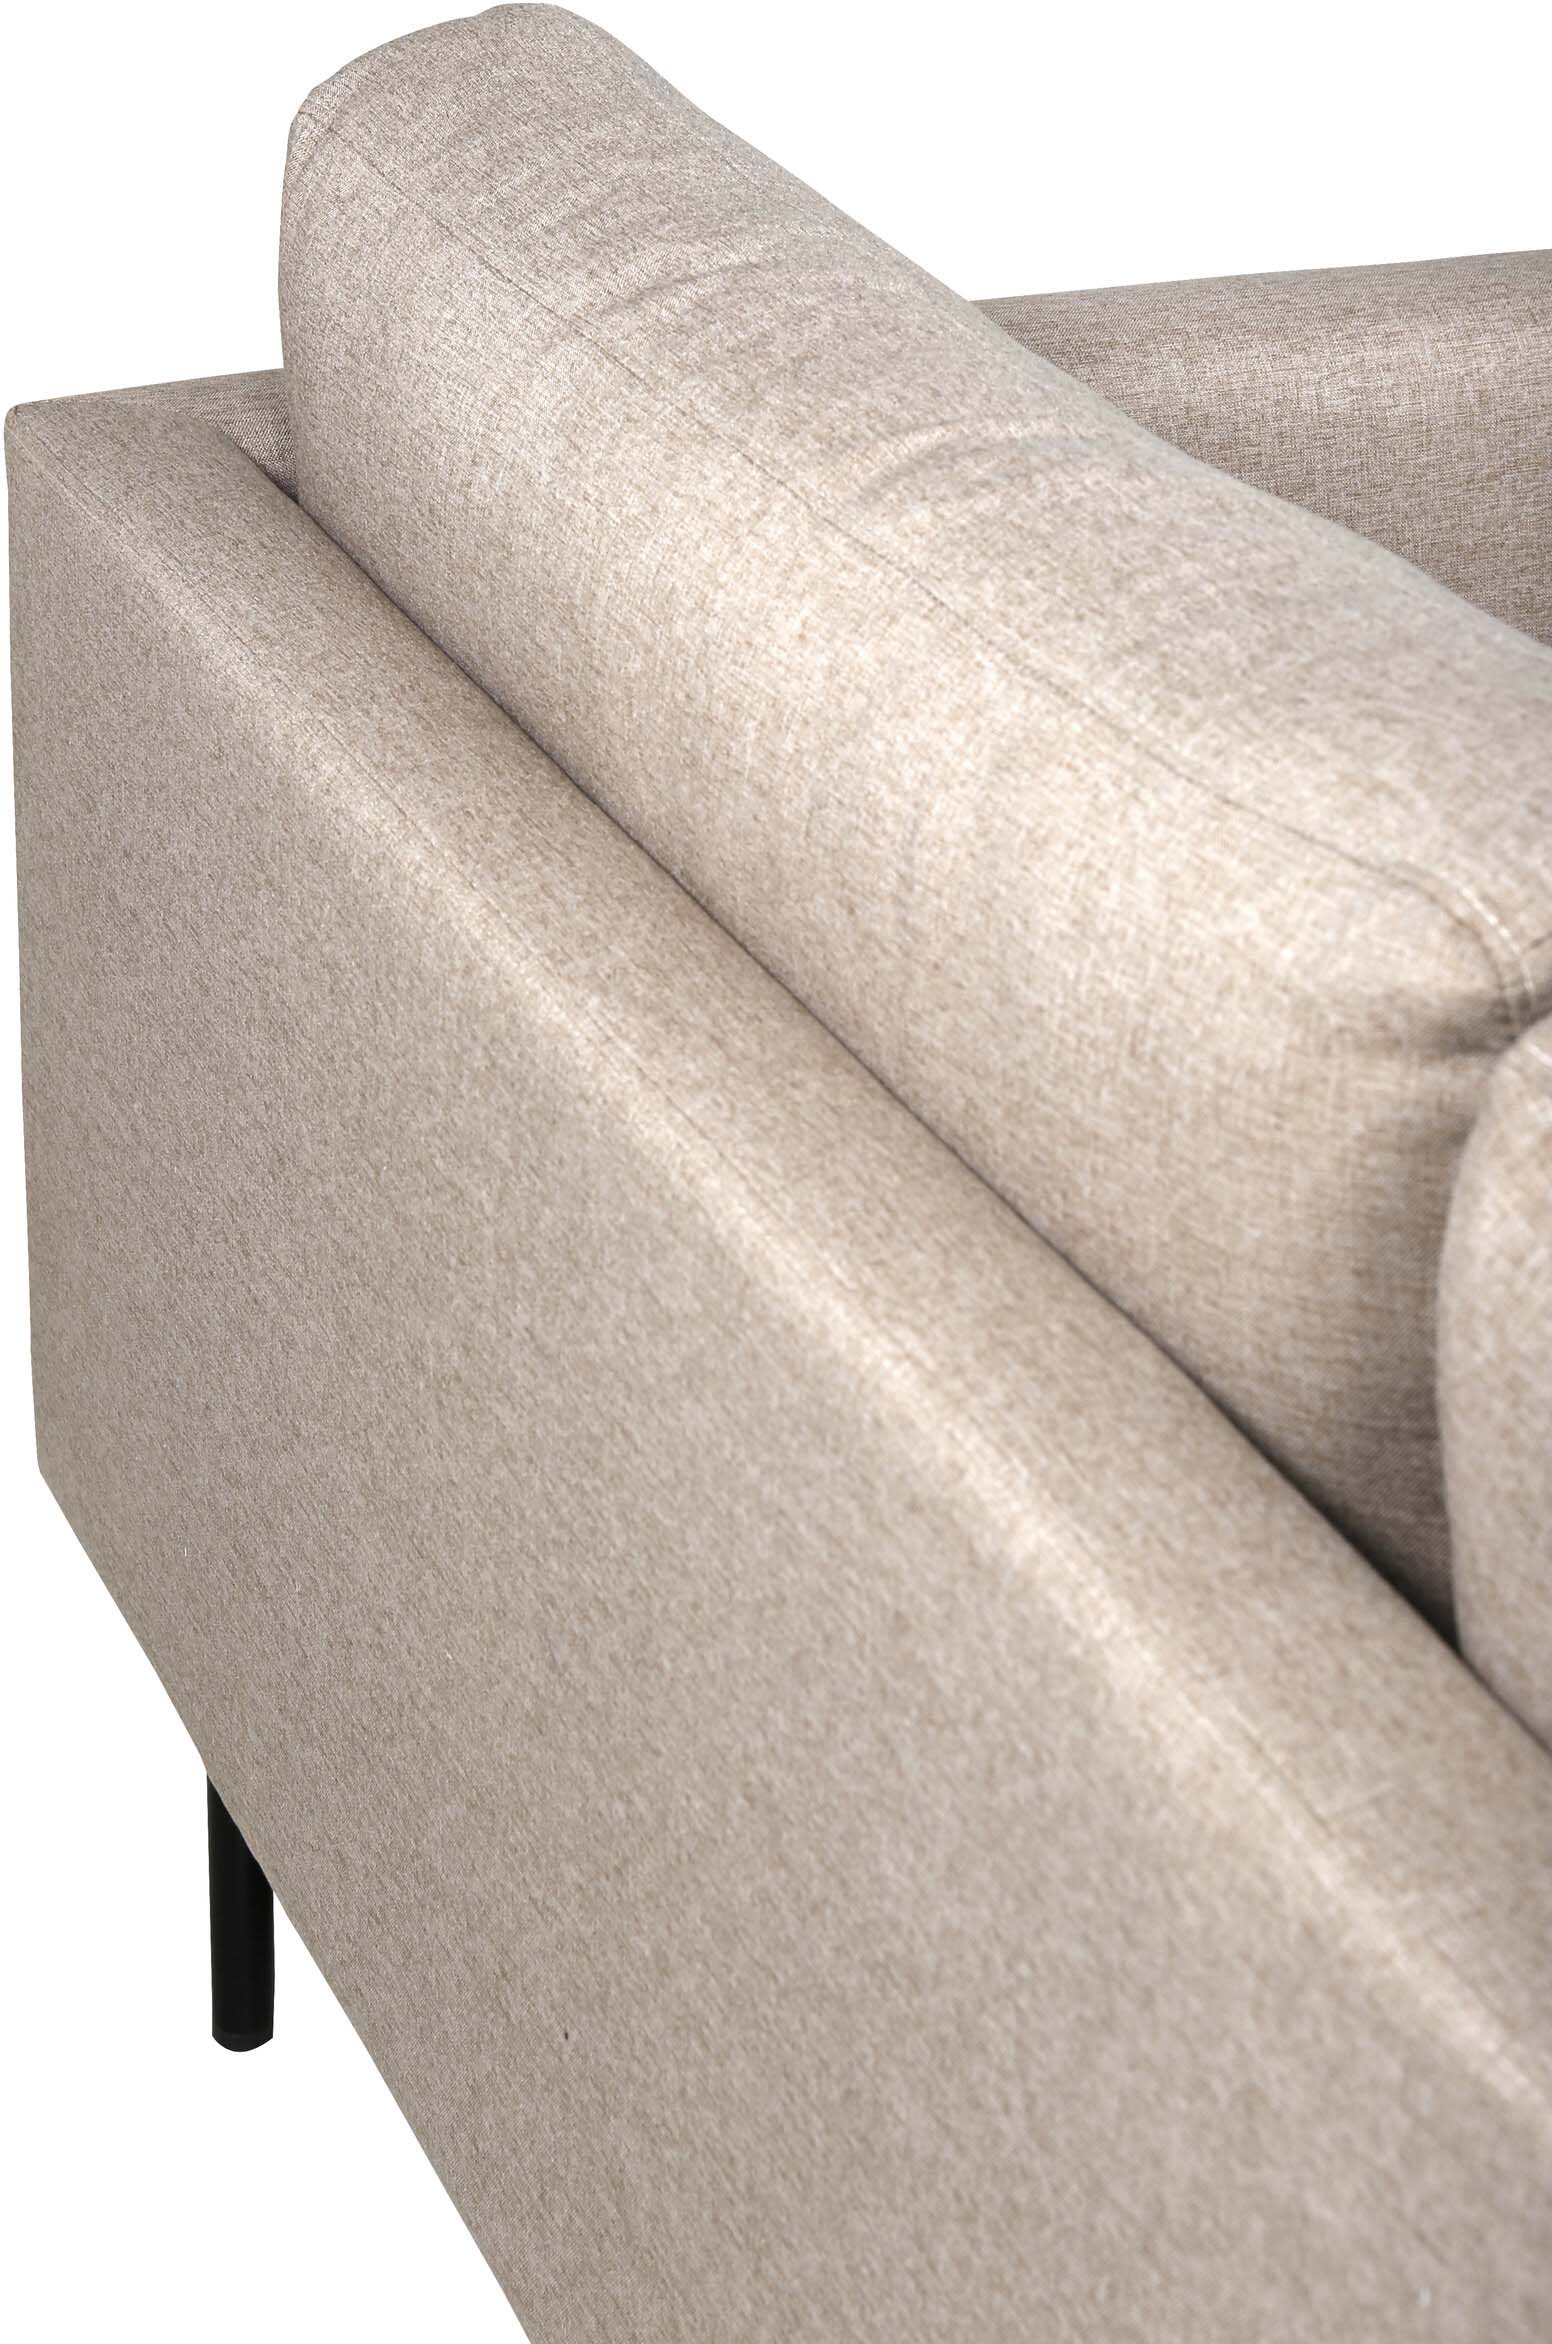 Zoom 2er Sofa - KAQTU Design